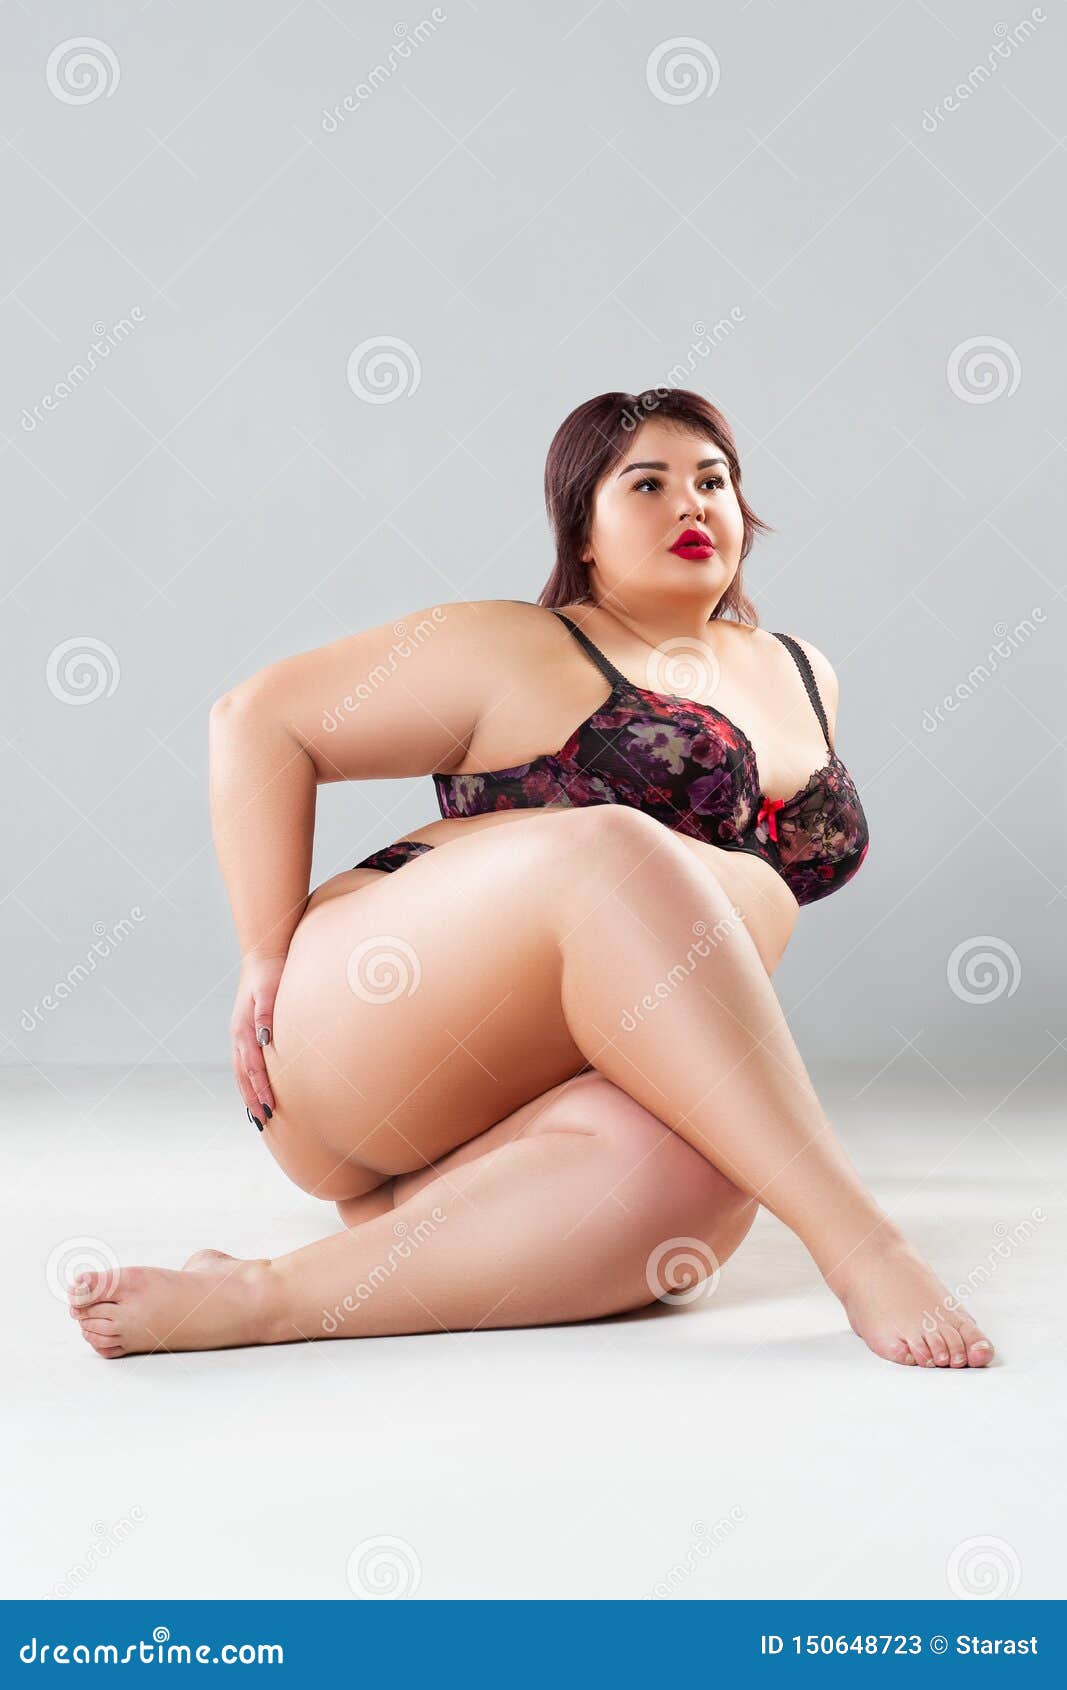 chubby women lingerie